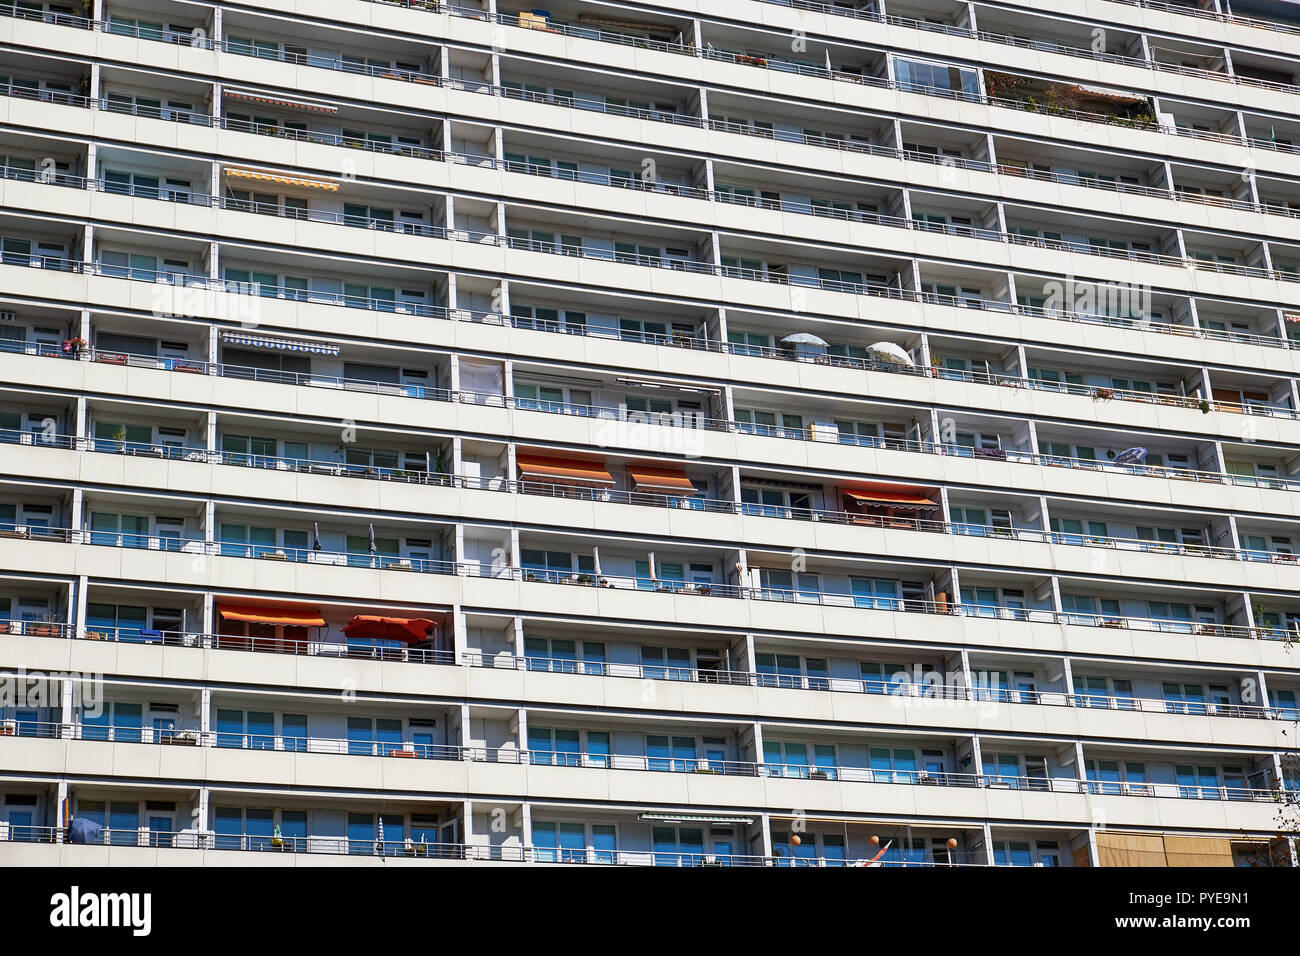 Balconies of a prefabricated public housing building seen in Berlin, Germany Stock Photo